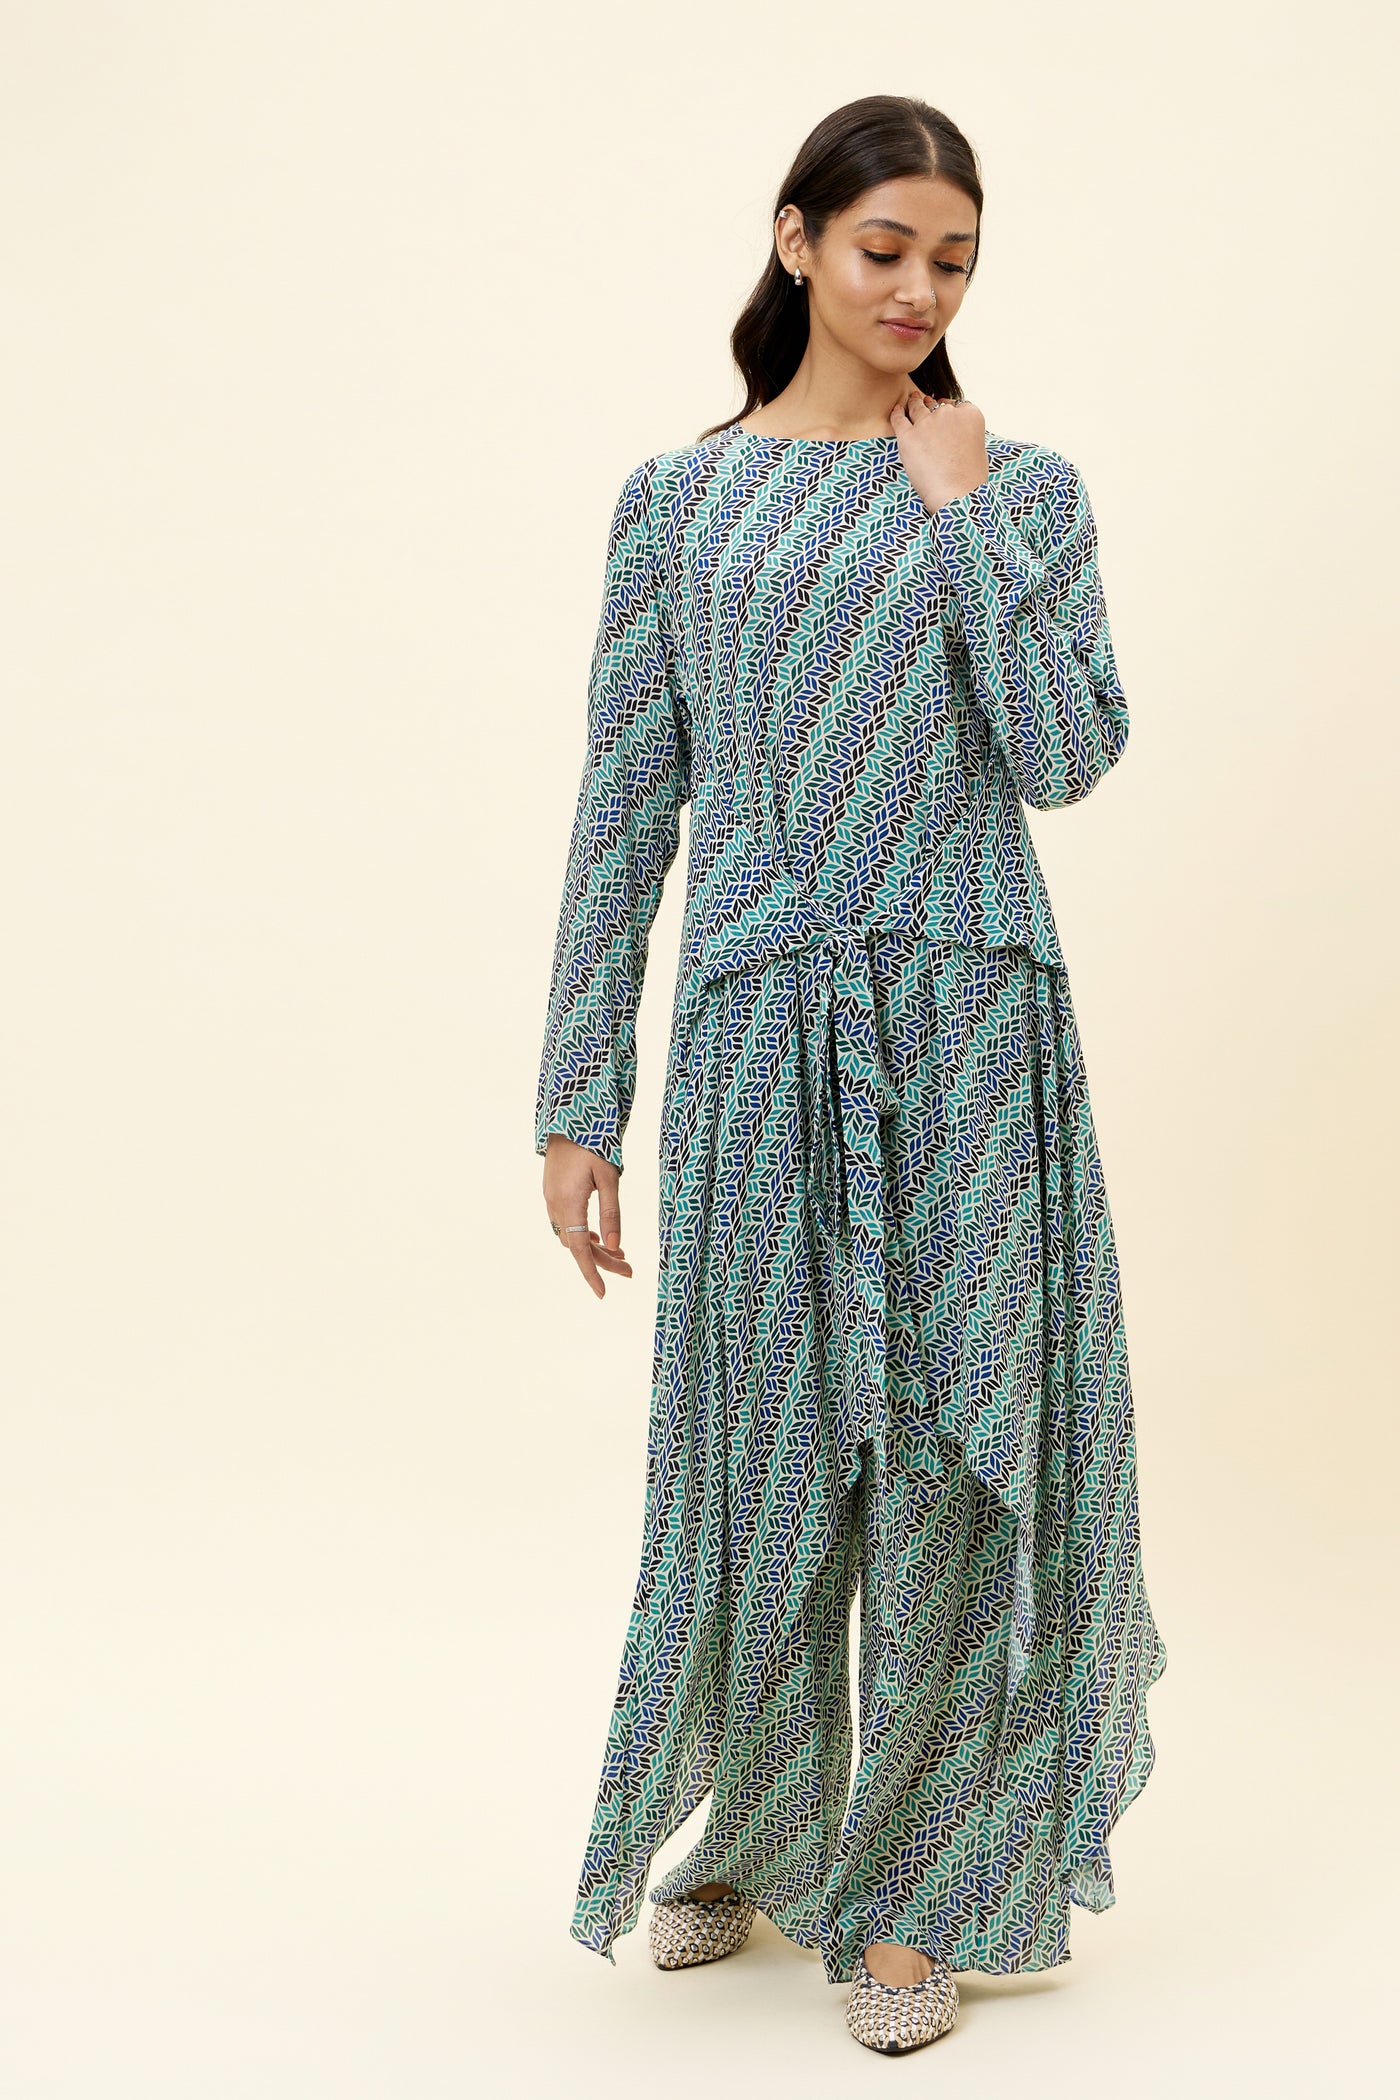 sva Beige Leaf Print Front Tie-Up Tunic Set online shopping melange singapore indian designer wear